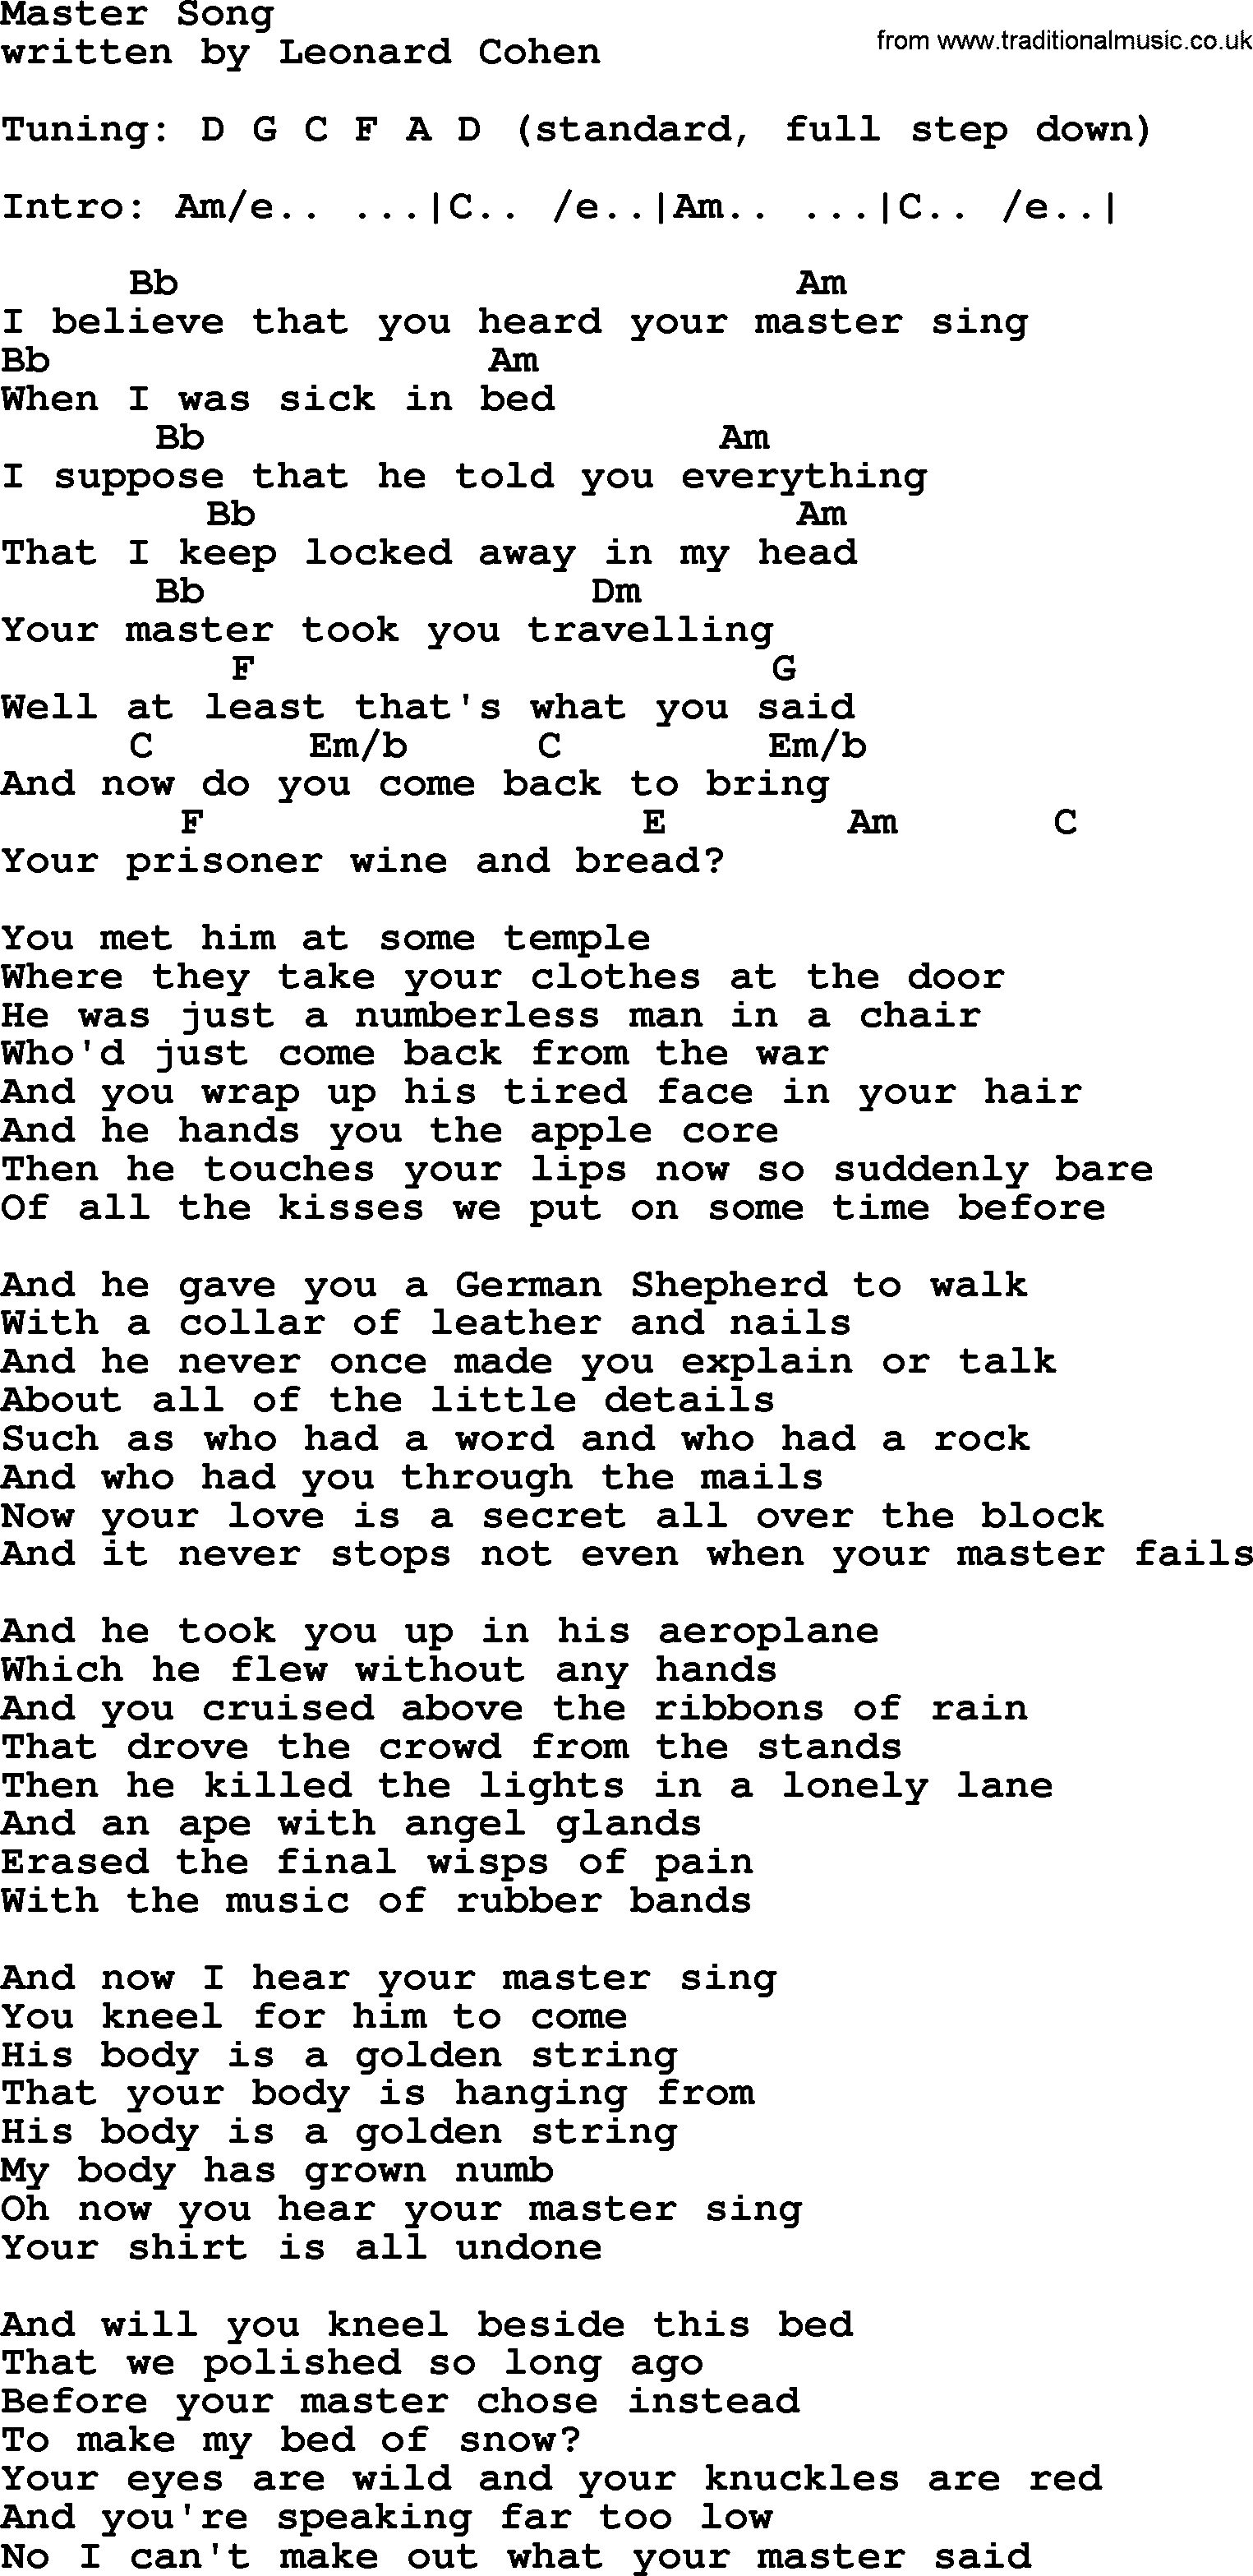 Leonard Cohen song Master Song, lyrics and chords